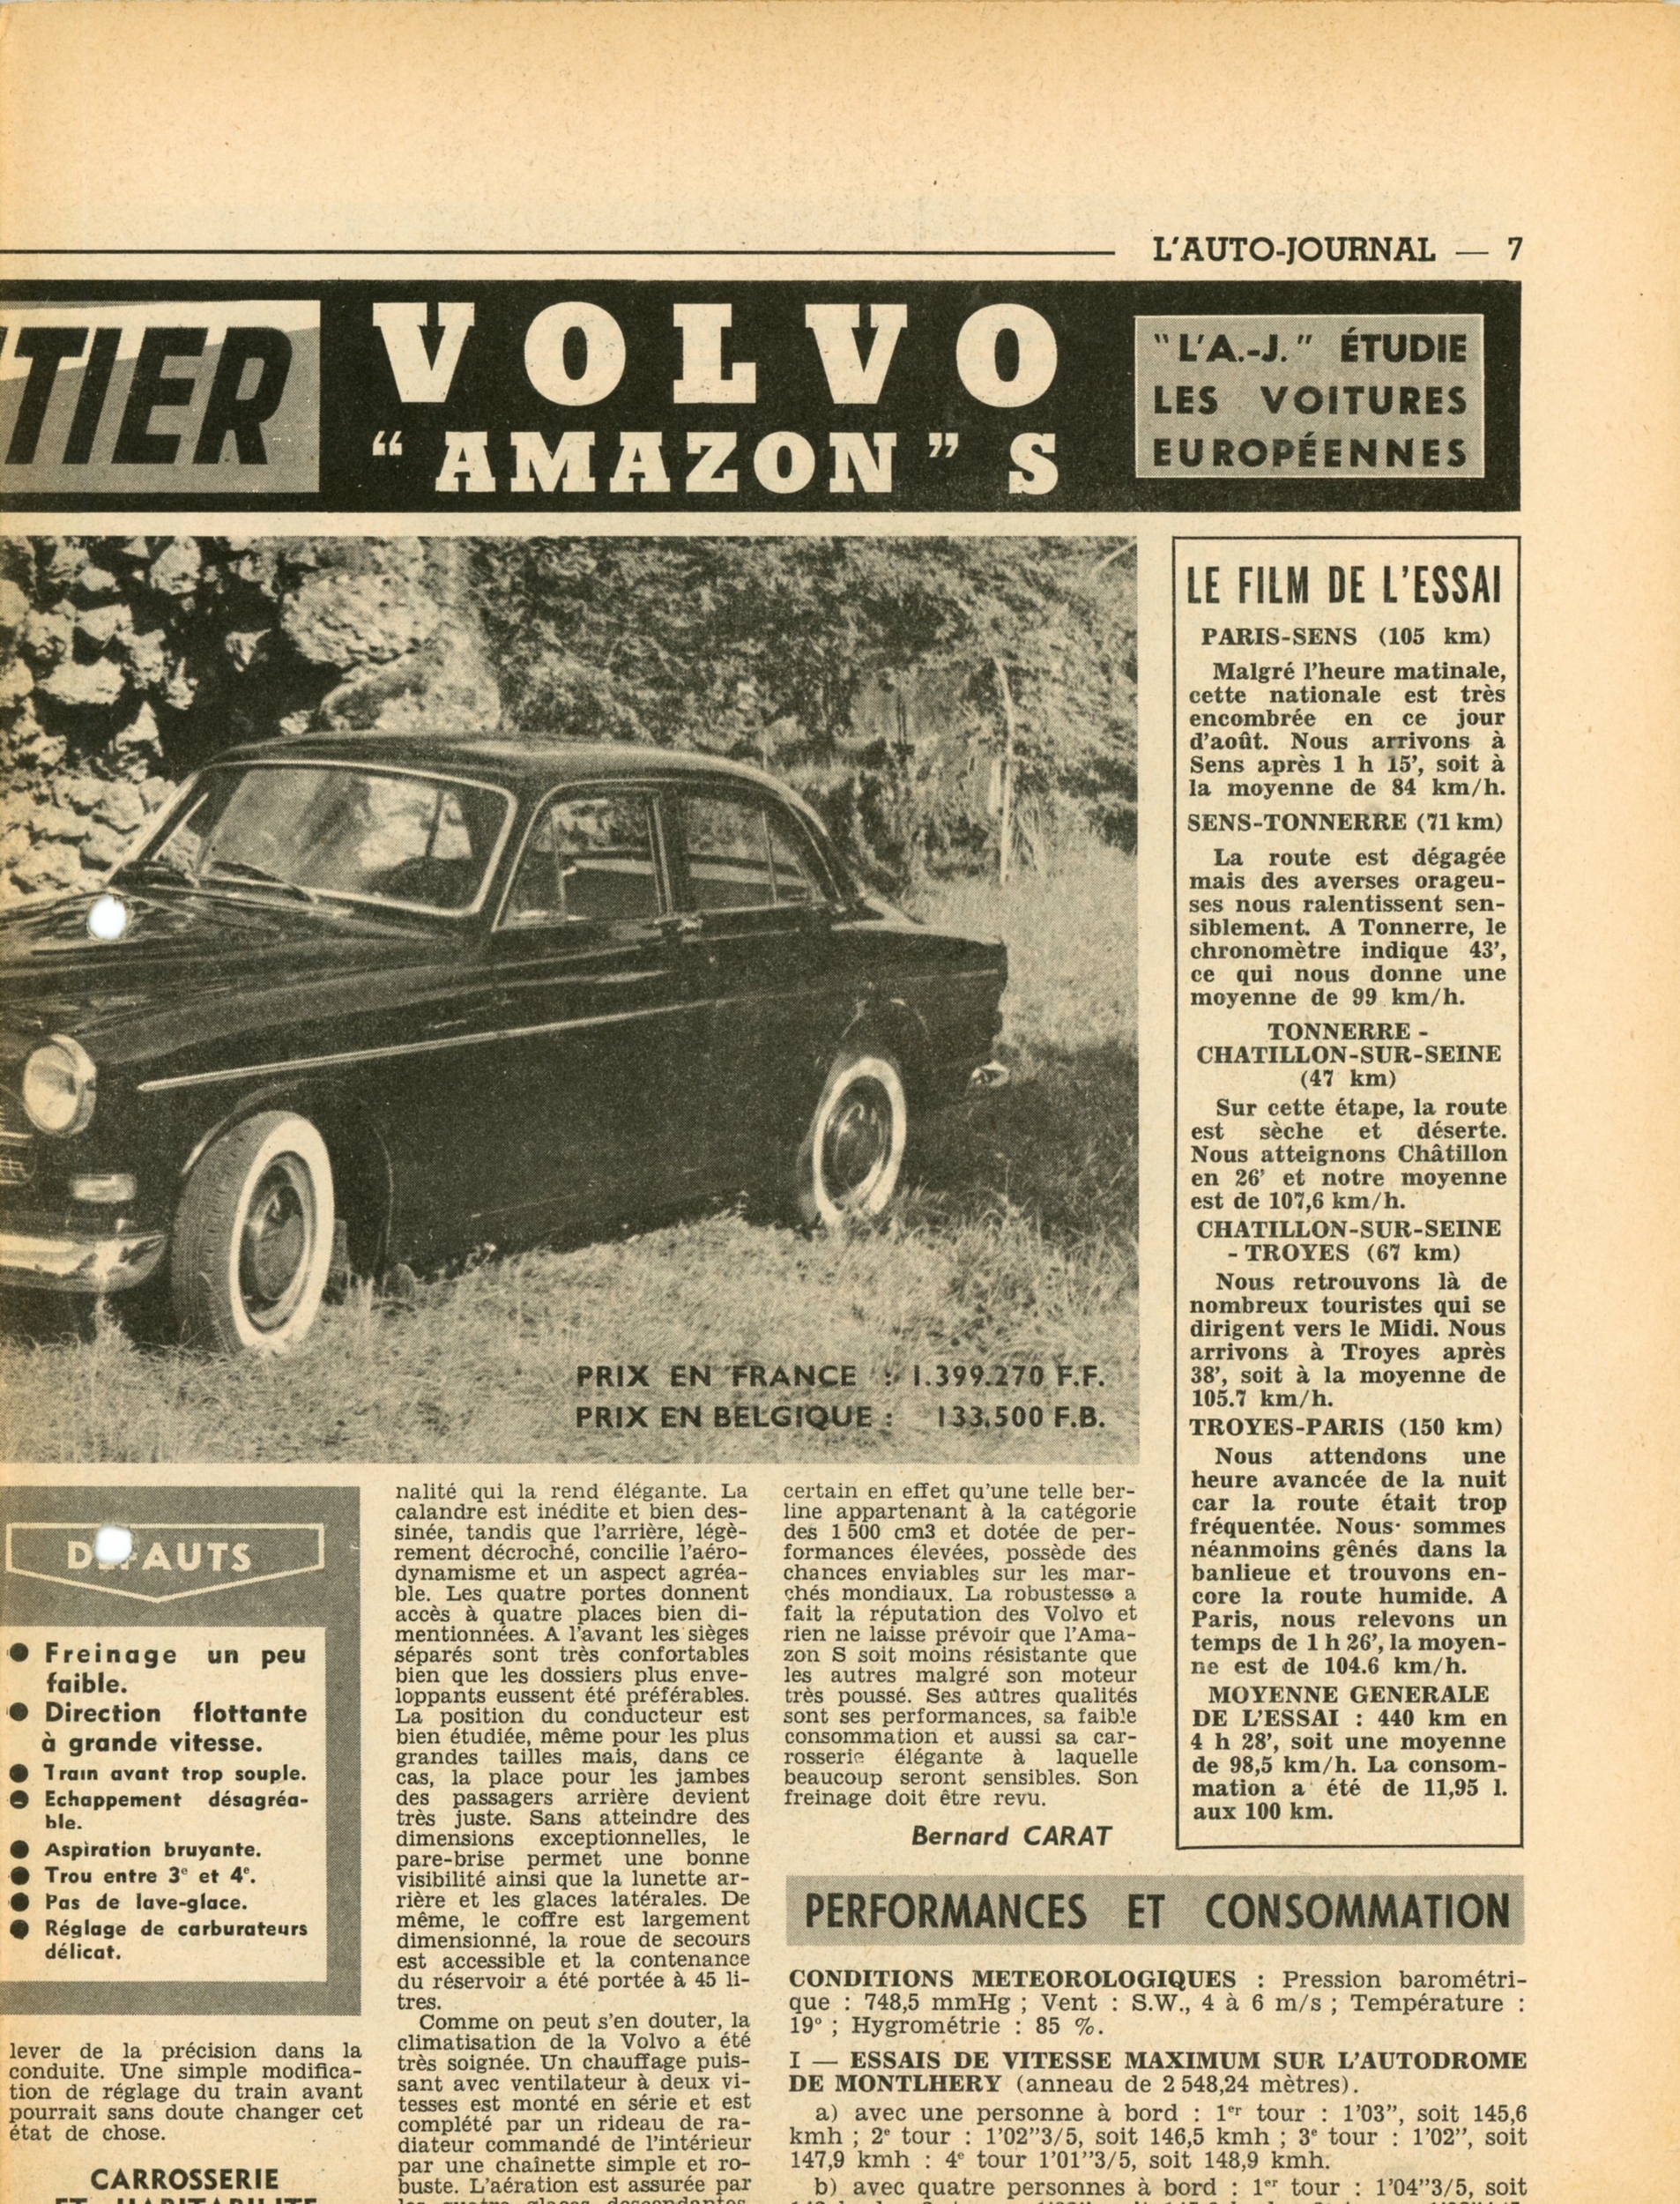 VOLVO AMAZON S ARTICLE DE PRESSE VOITURE AUTOMOBILE 1958